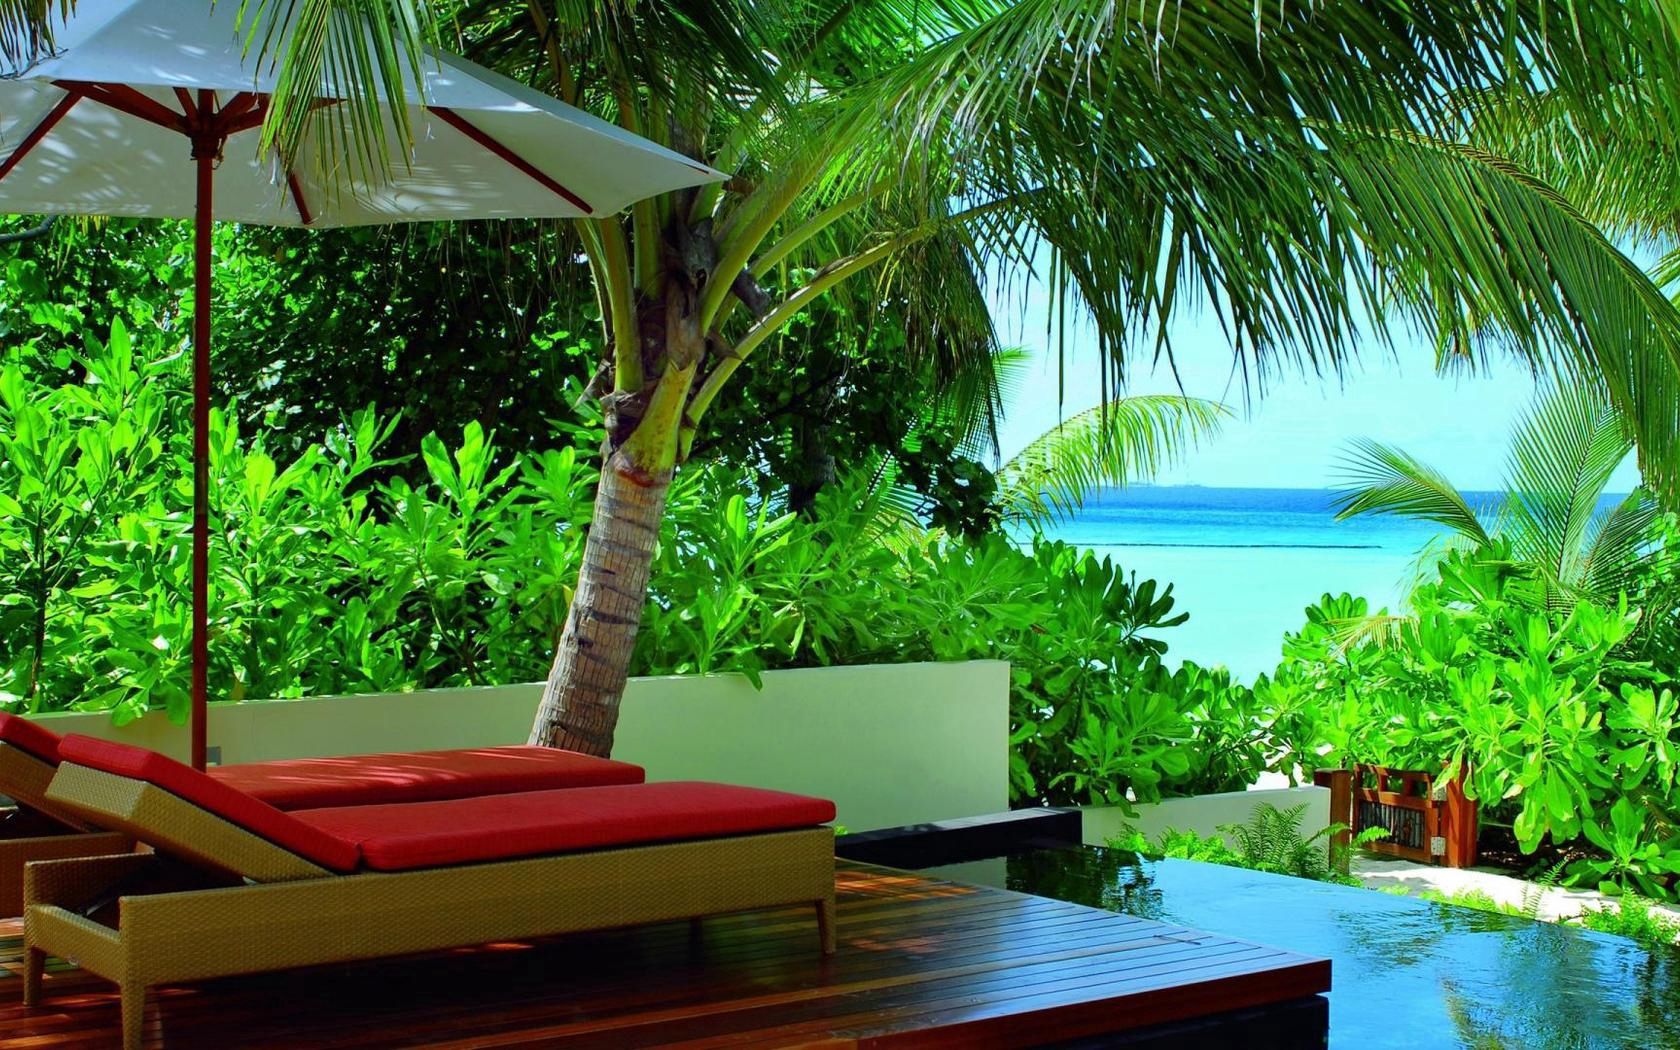 resort, maldives, nature, palms, vegetation, greens, tropics, sun lounger, deck chair, chairs, armchairs